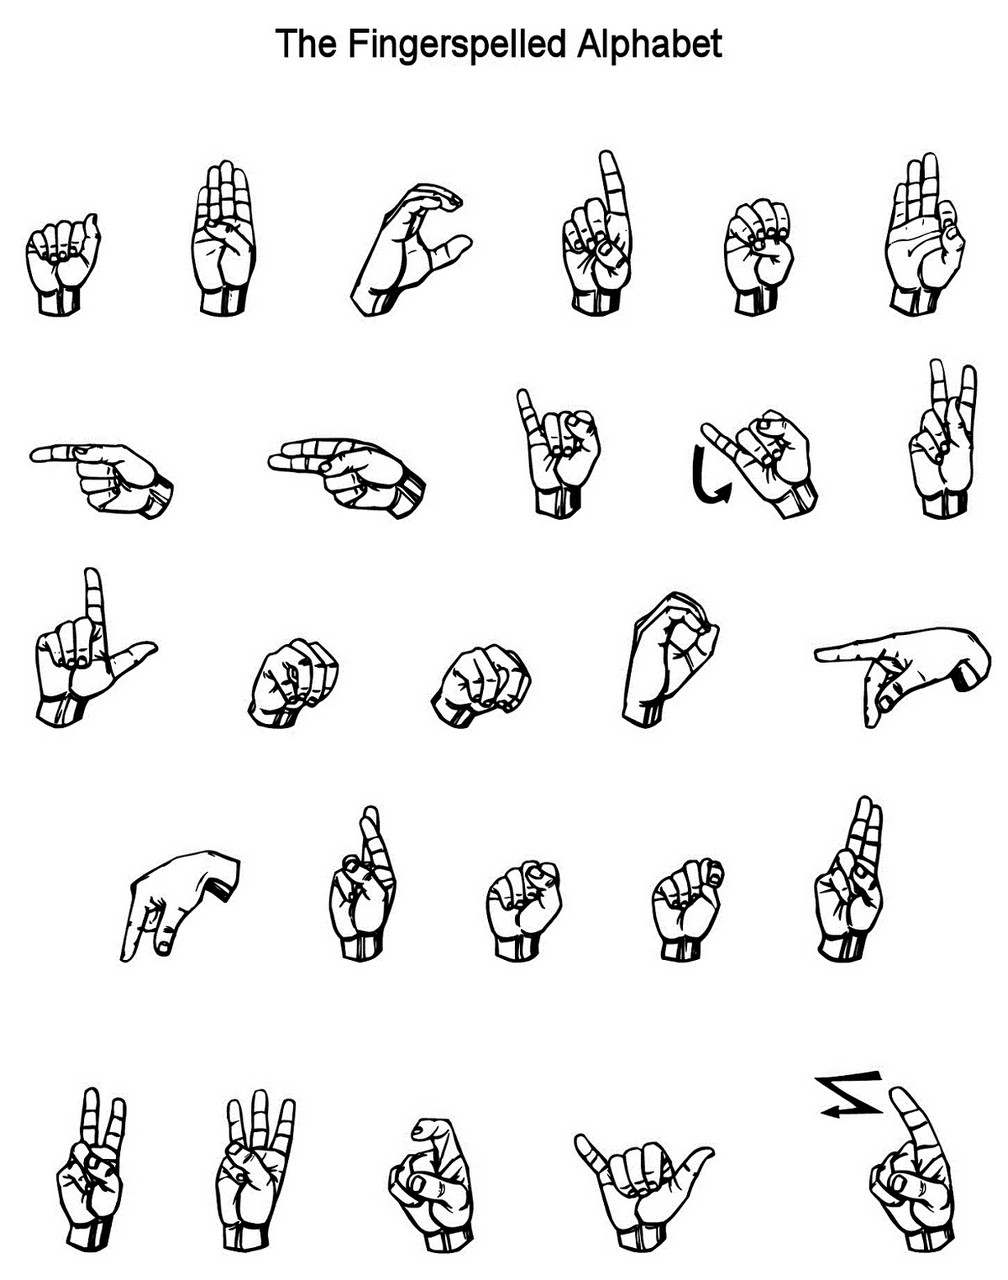 sign language chart image